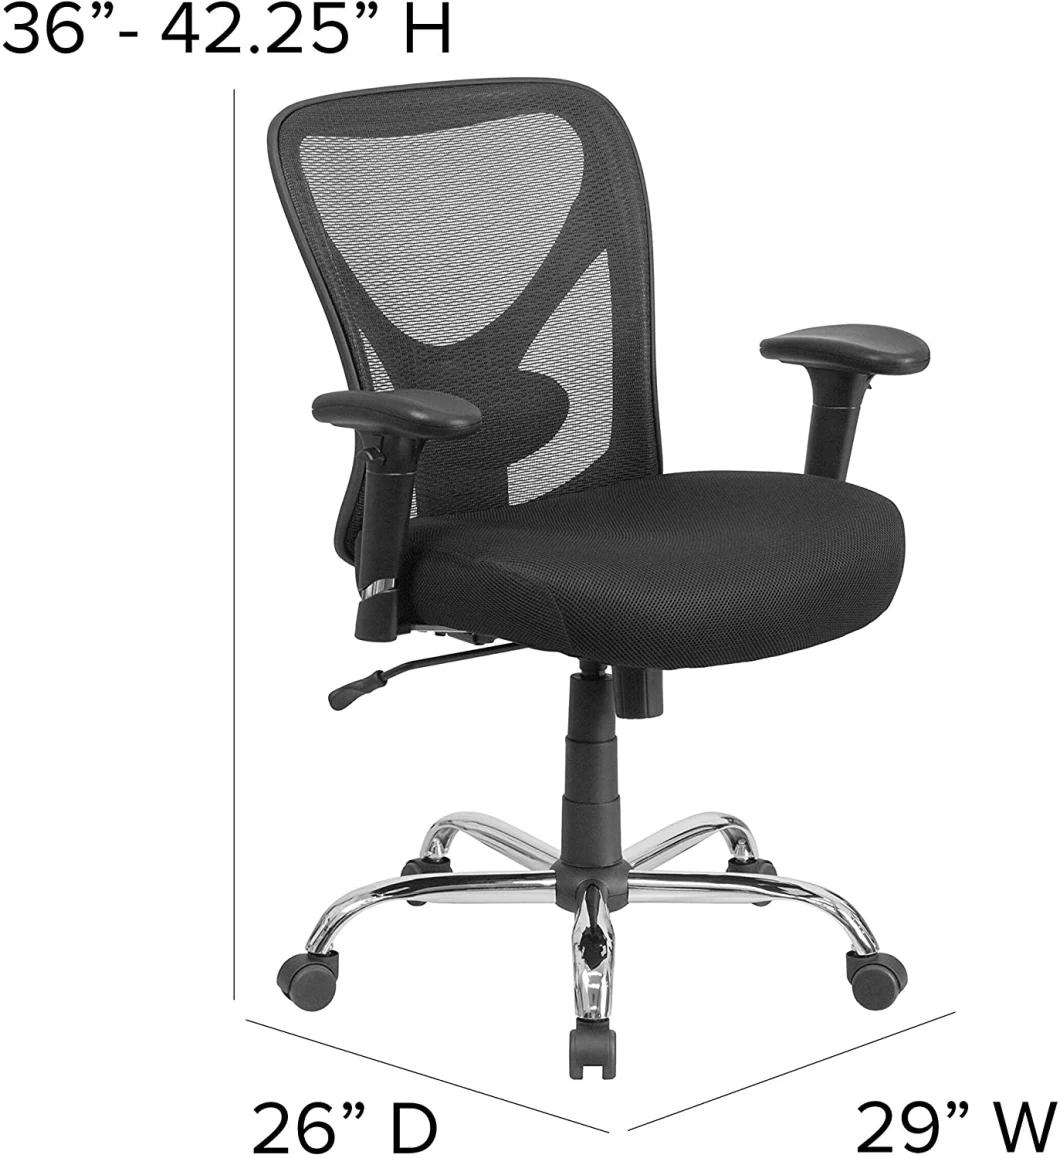 Office Modern Furniture Mesh Computer Ergonomic MID Back Desk Chairs